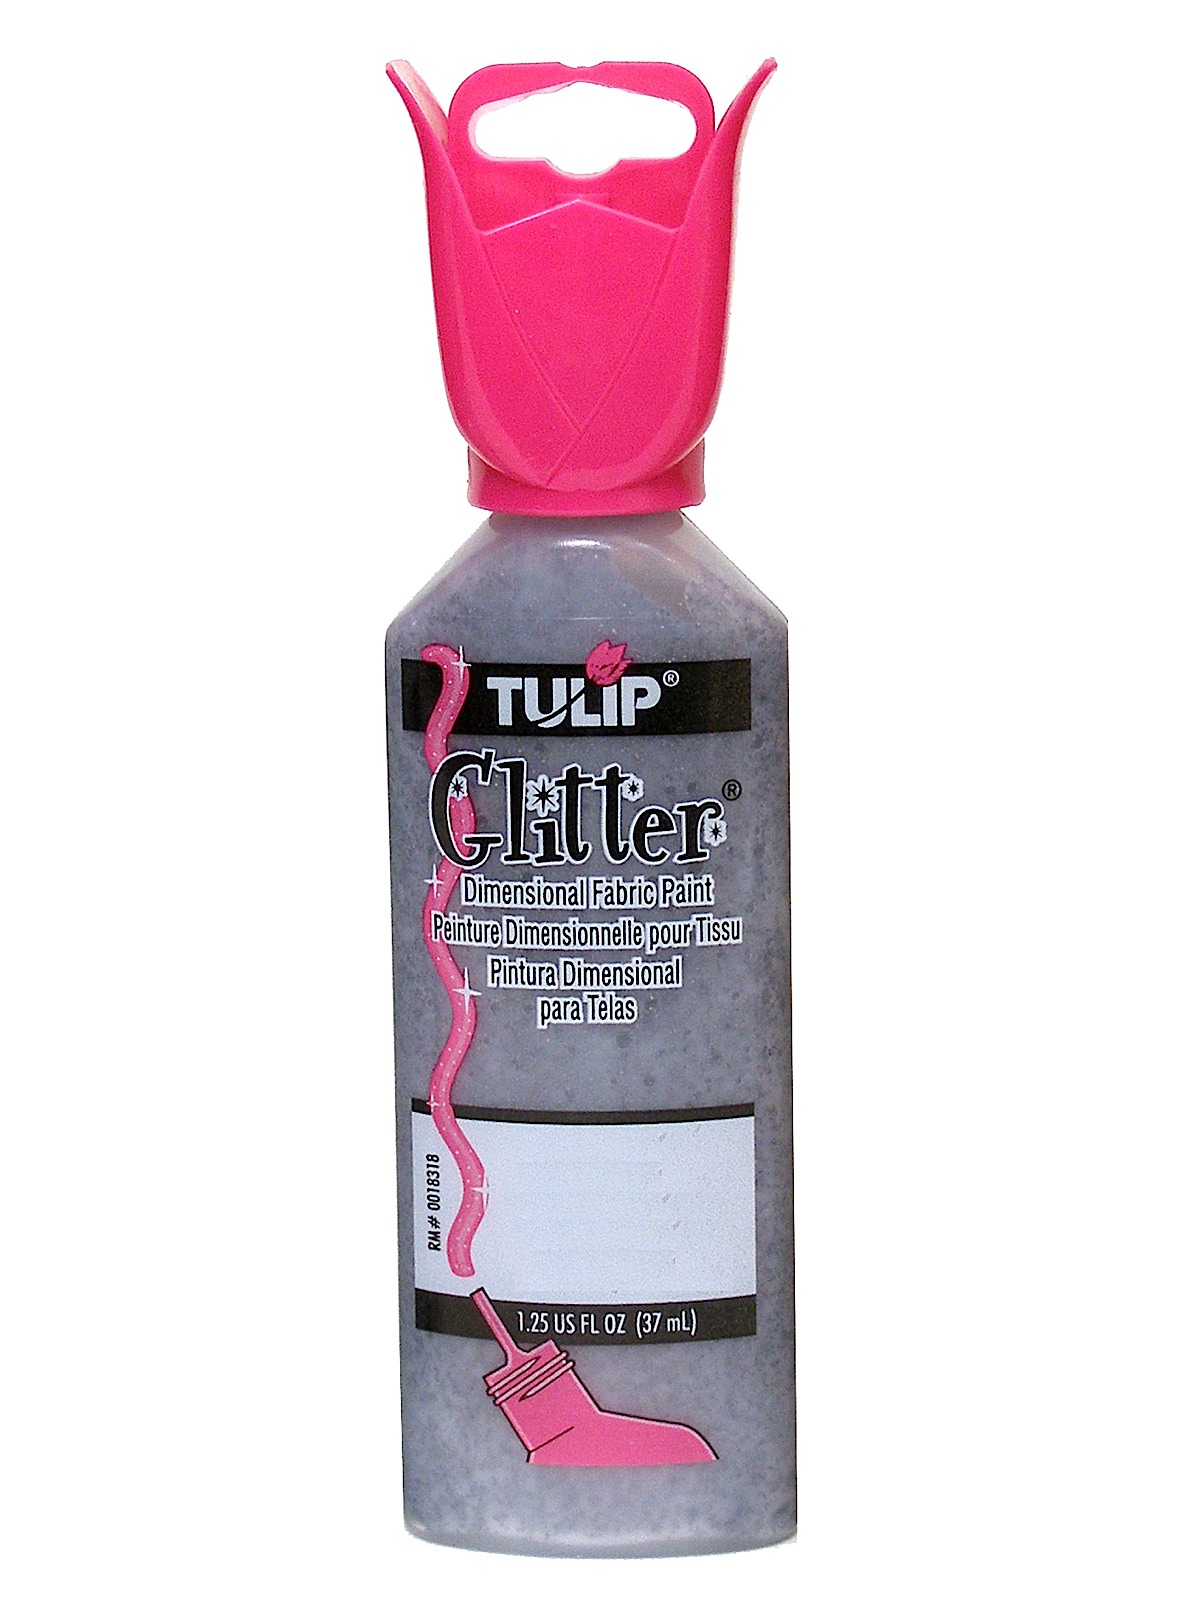 Tulip Glitter Dimensional Fabric Paint